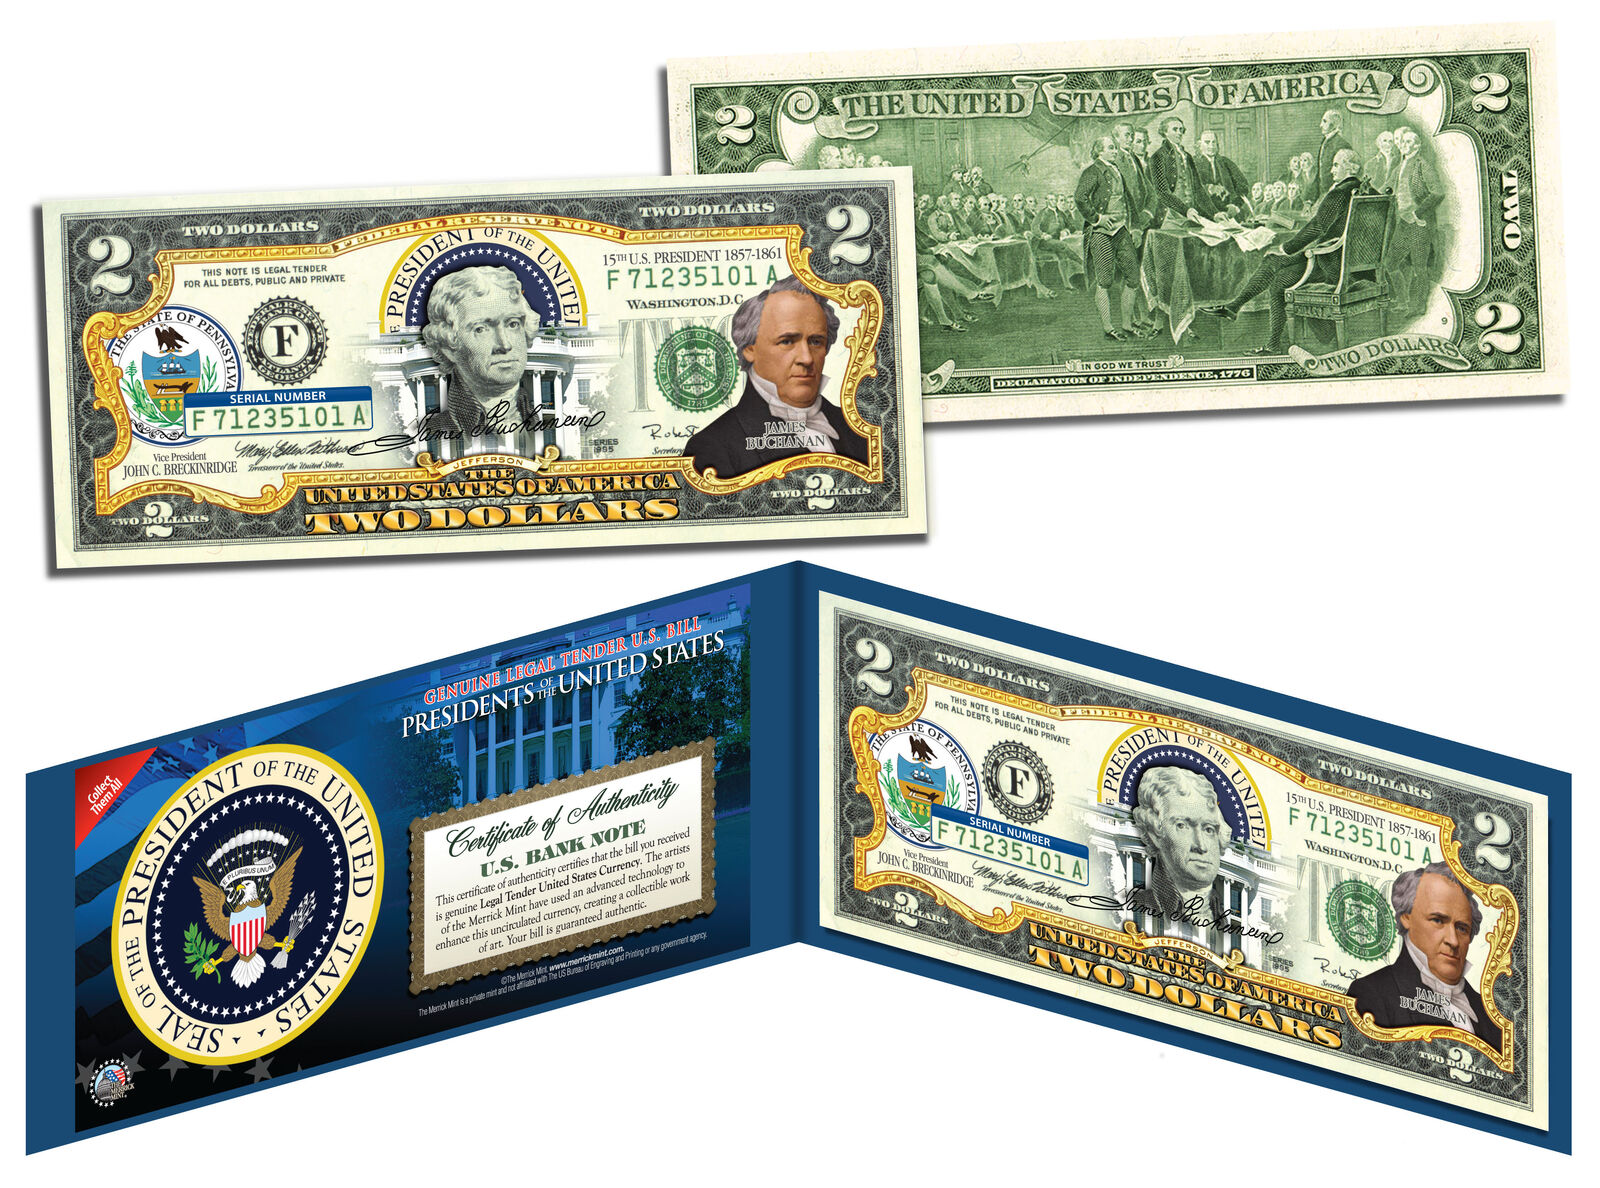 JAMES BUCHANAN * 15th U.S. President * Colorized $2 Bill US Genuine Legal Tender